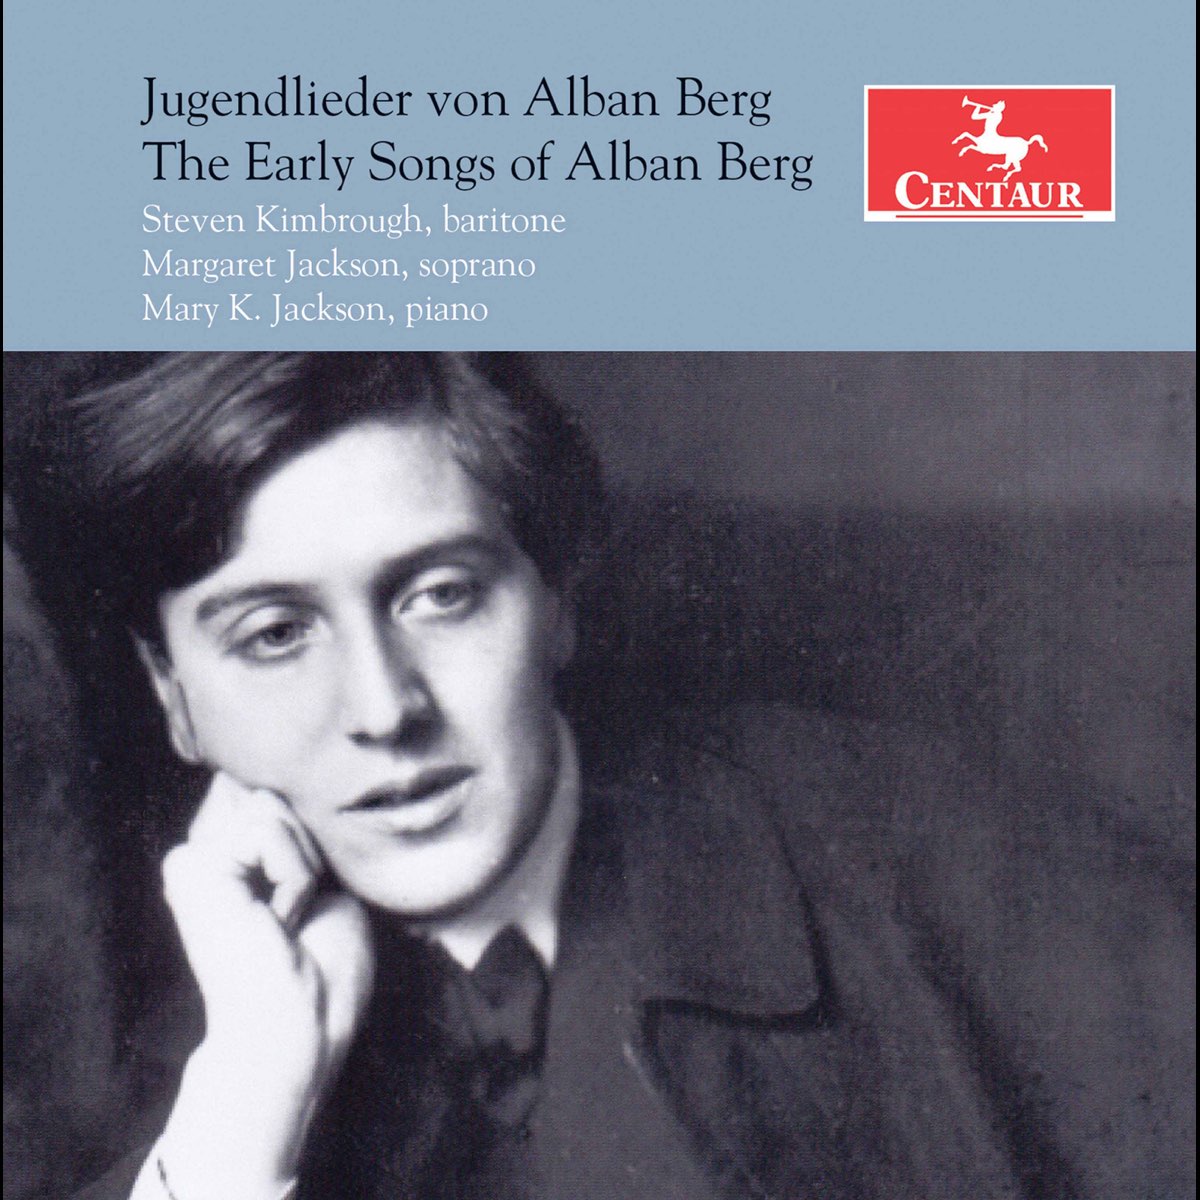 Альбан Берг австрийский композитор. Альбан Берг портрет. Альбан Берг молодой.